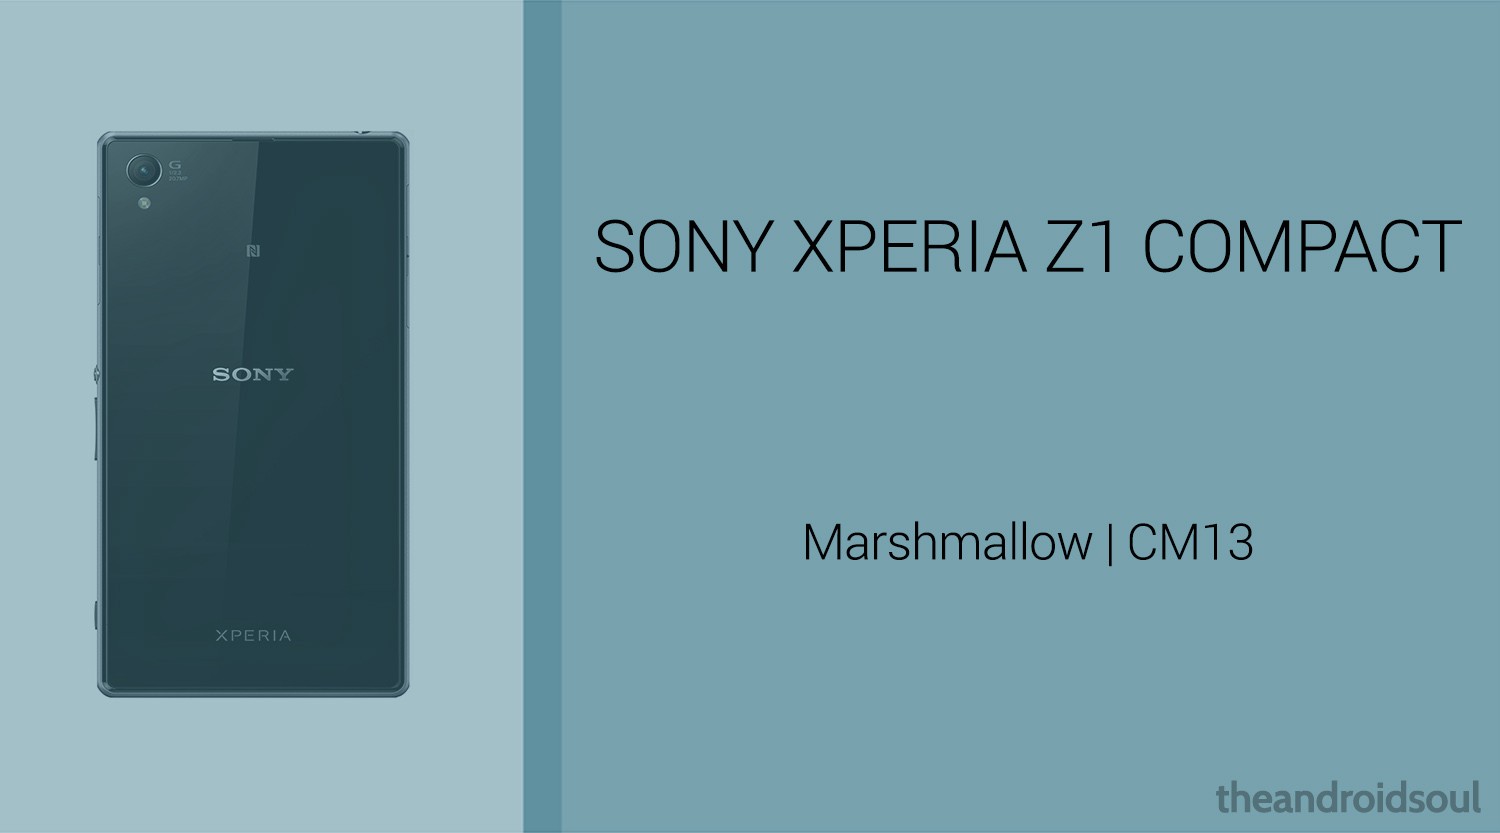 Descargar Sony Xperia Z1 Compact Marshmallow Update: CM13 y otras ROM